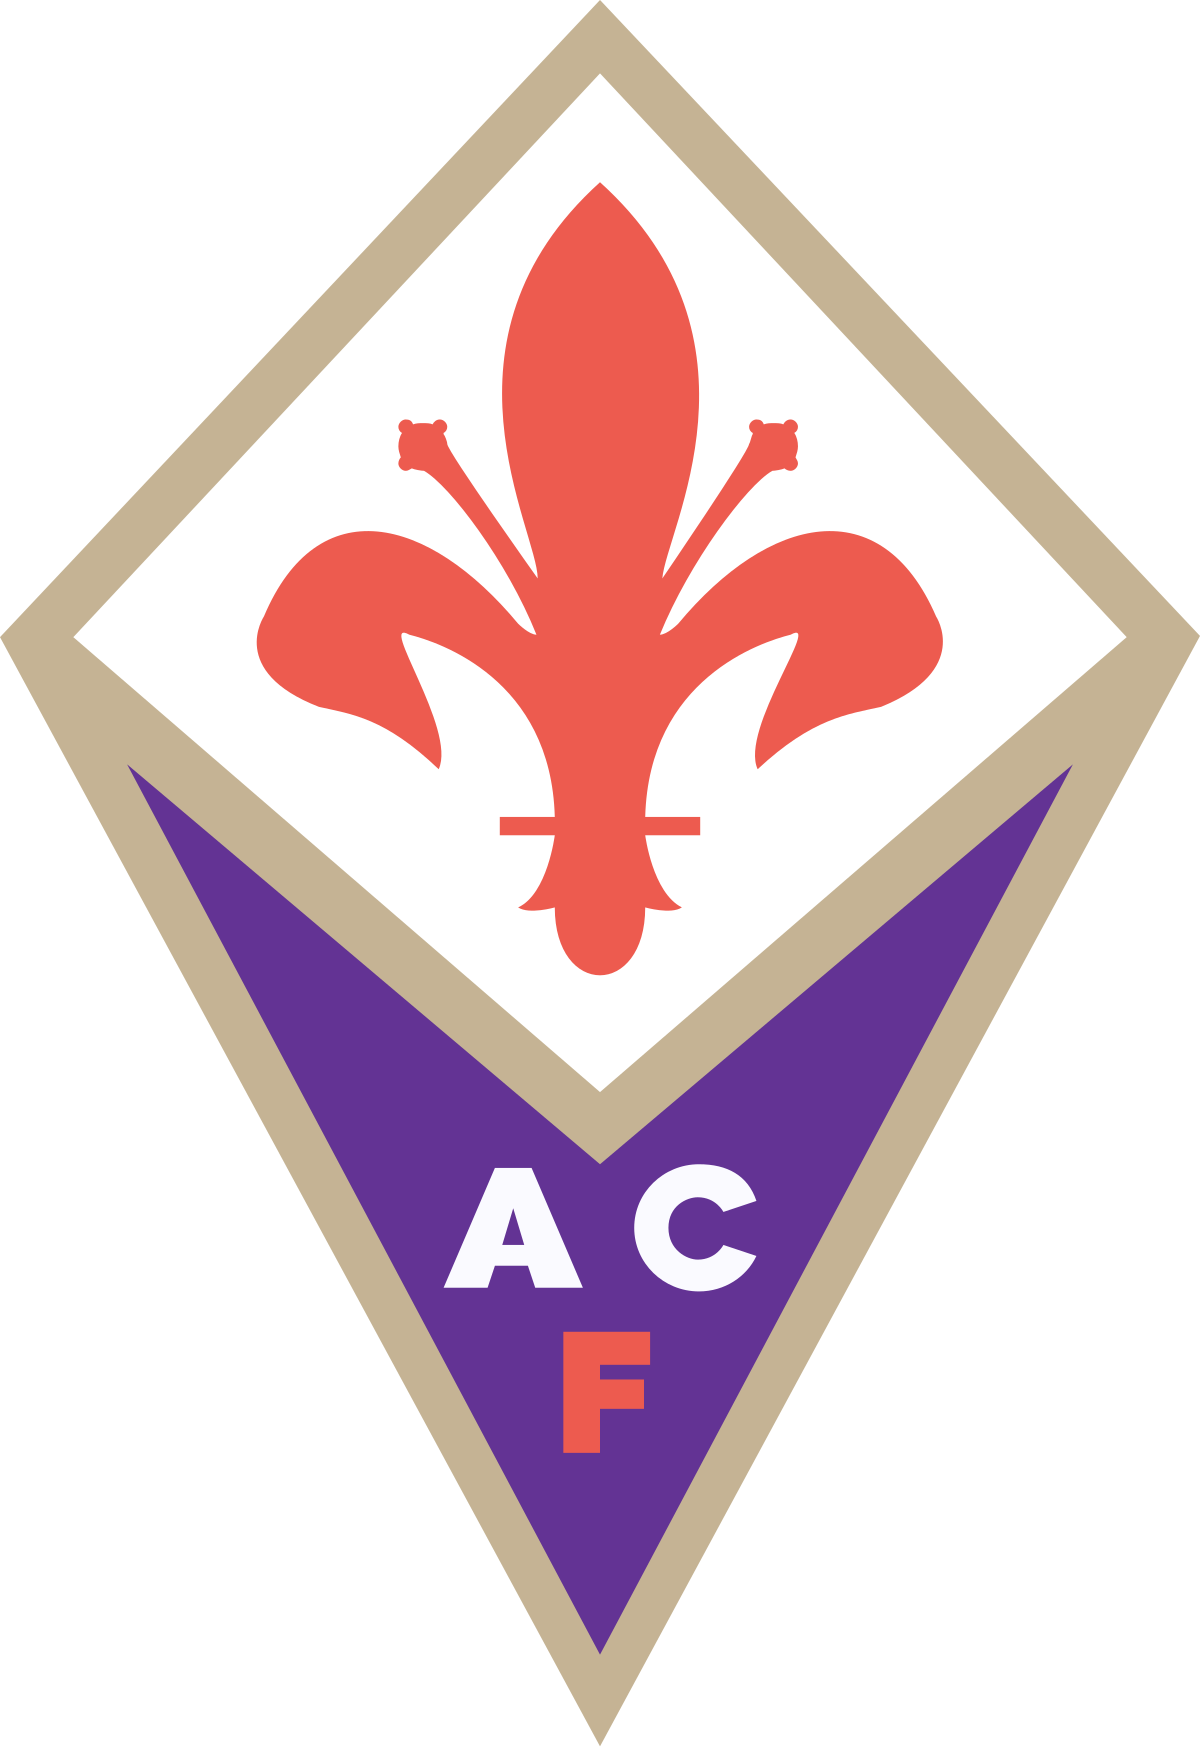 ACF Fiorentina Femminile - ᴡɪɴɴɪɴɢ ꜰᴇᴇʟɪɴɢ 💜 #ForzaViola 💜